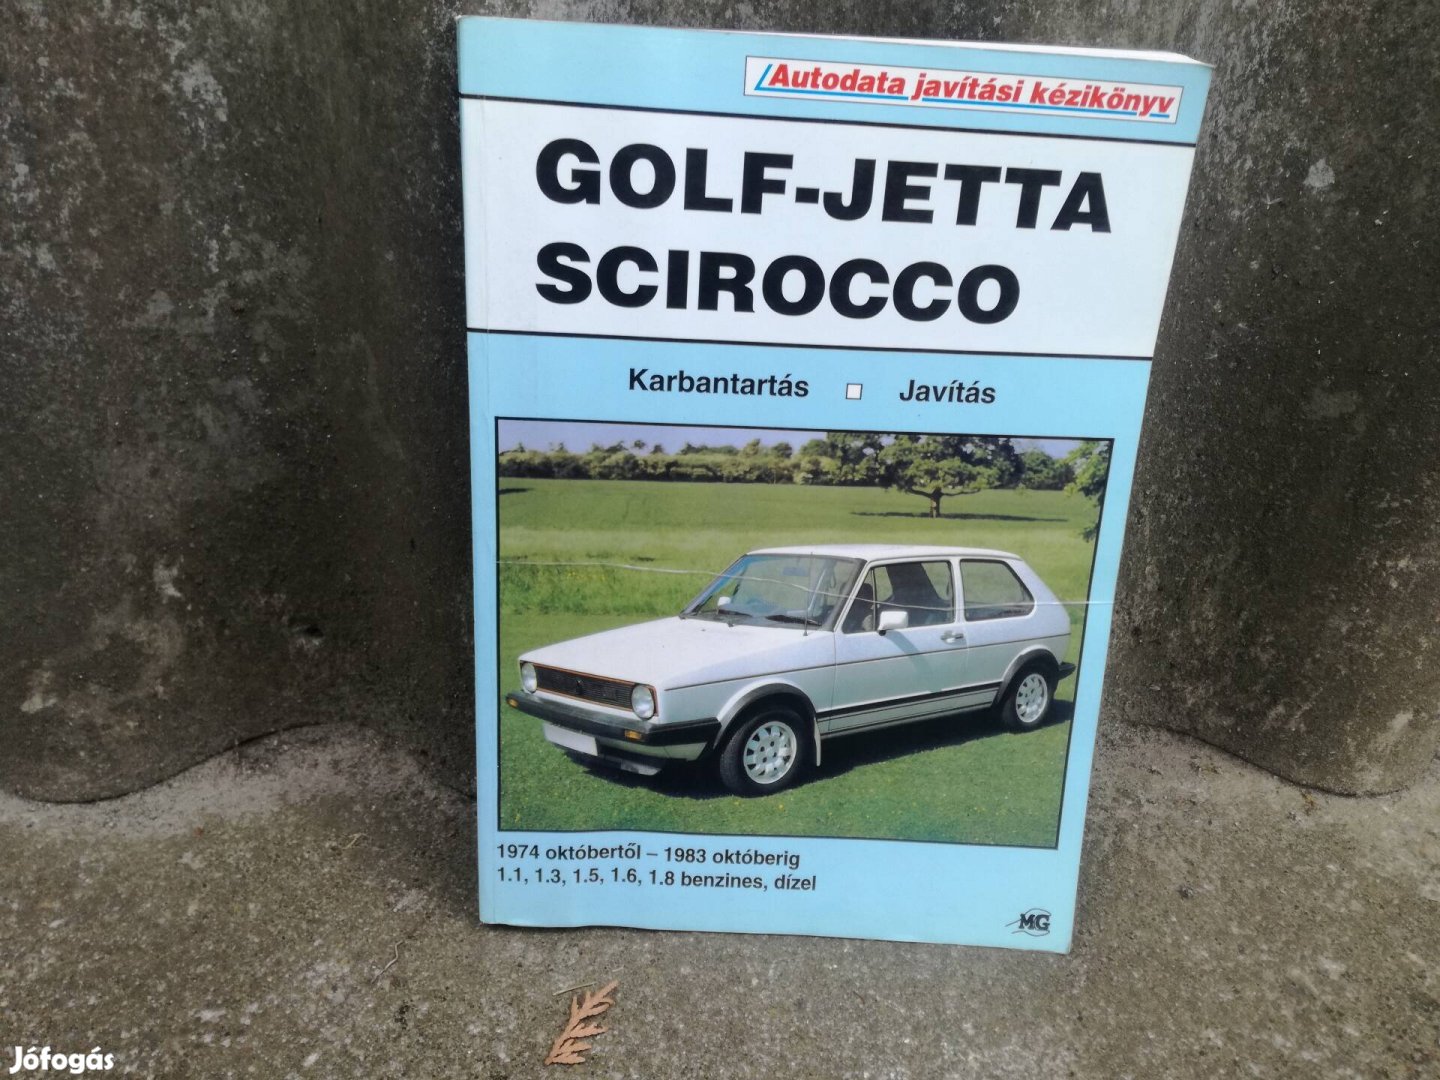 VW Golf Jetta Scirocco javítási könyv magyar nyelvű 